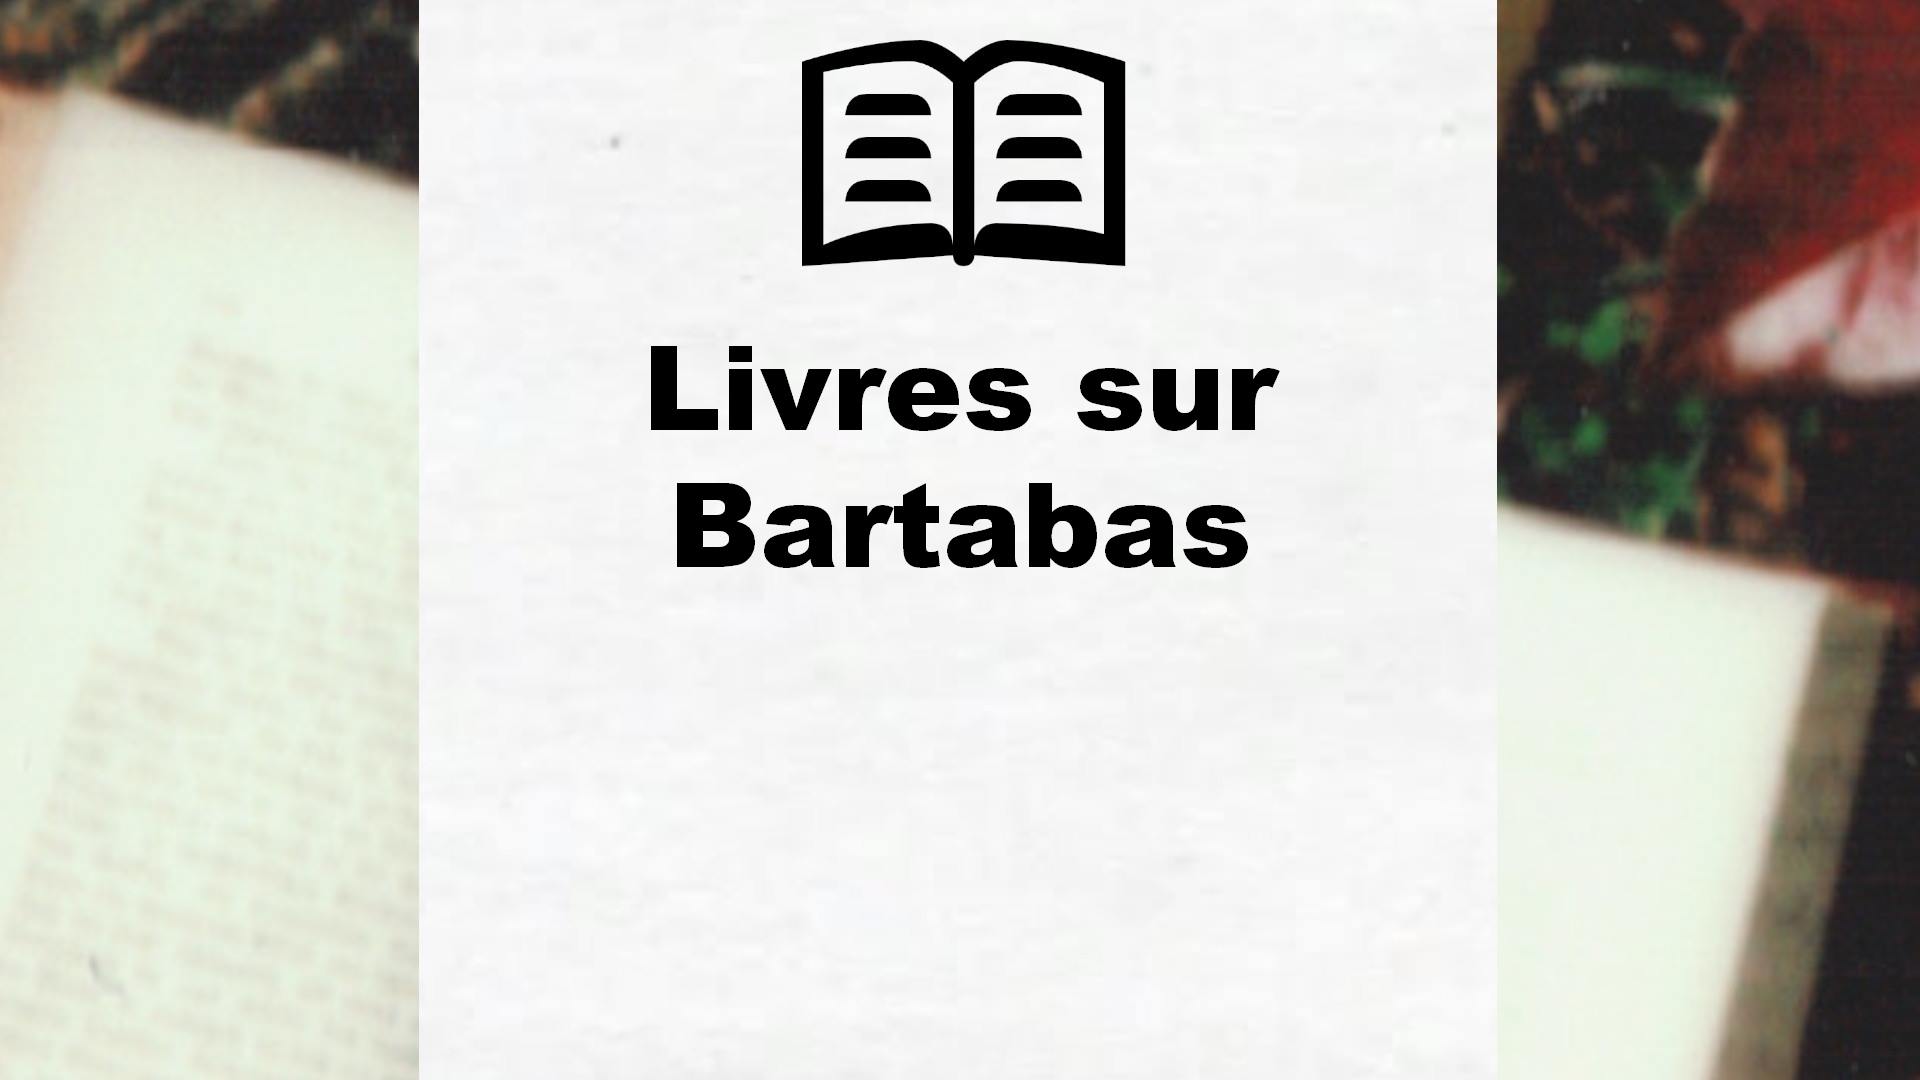 Livres sur Bartabas